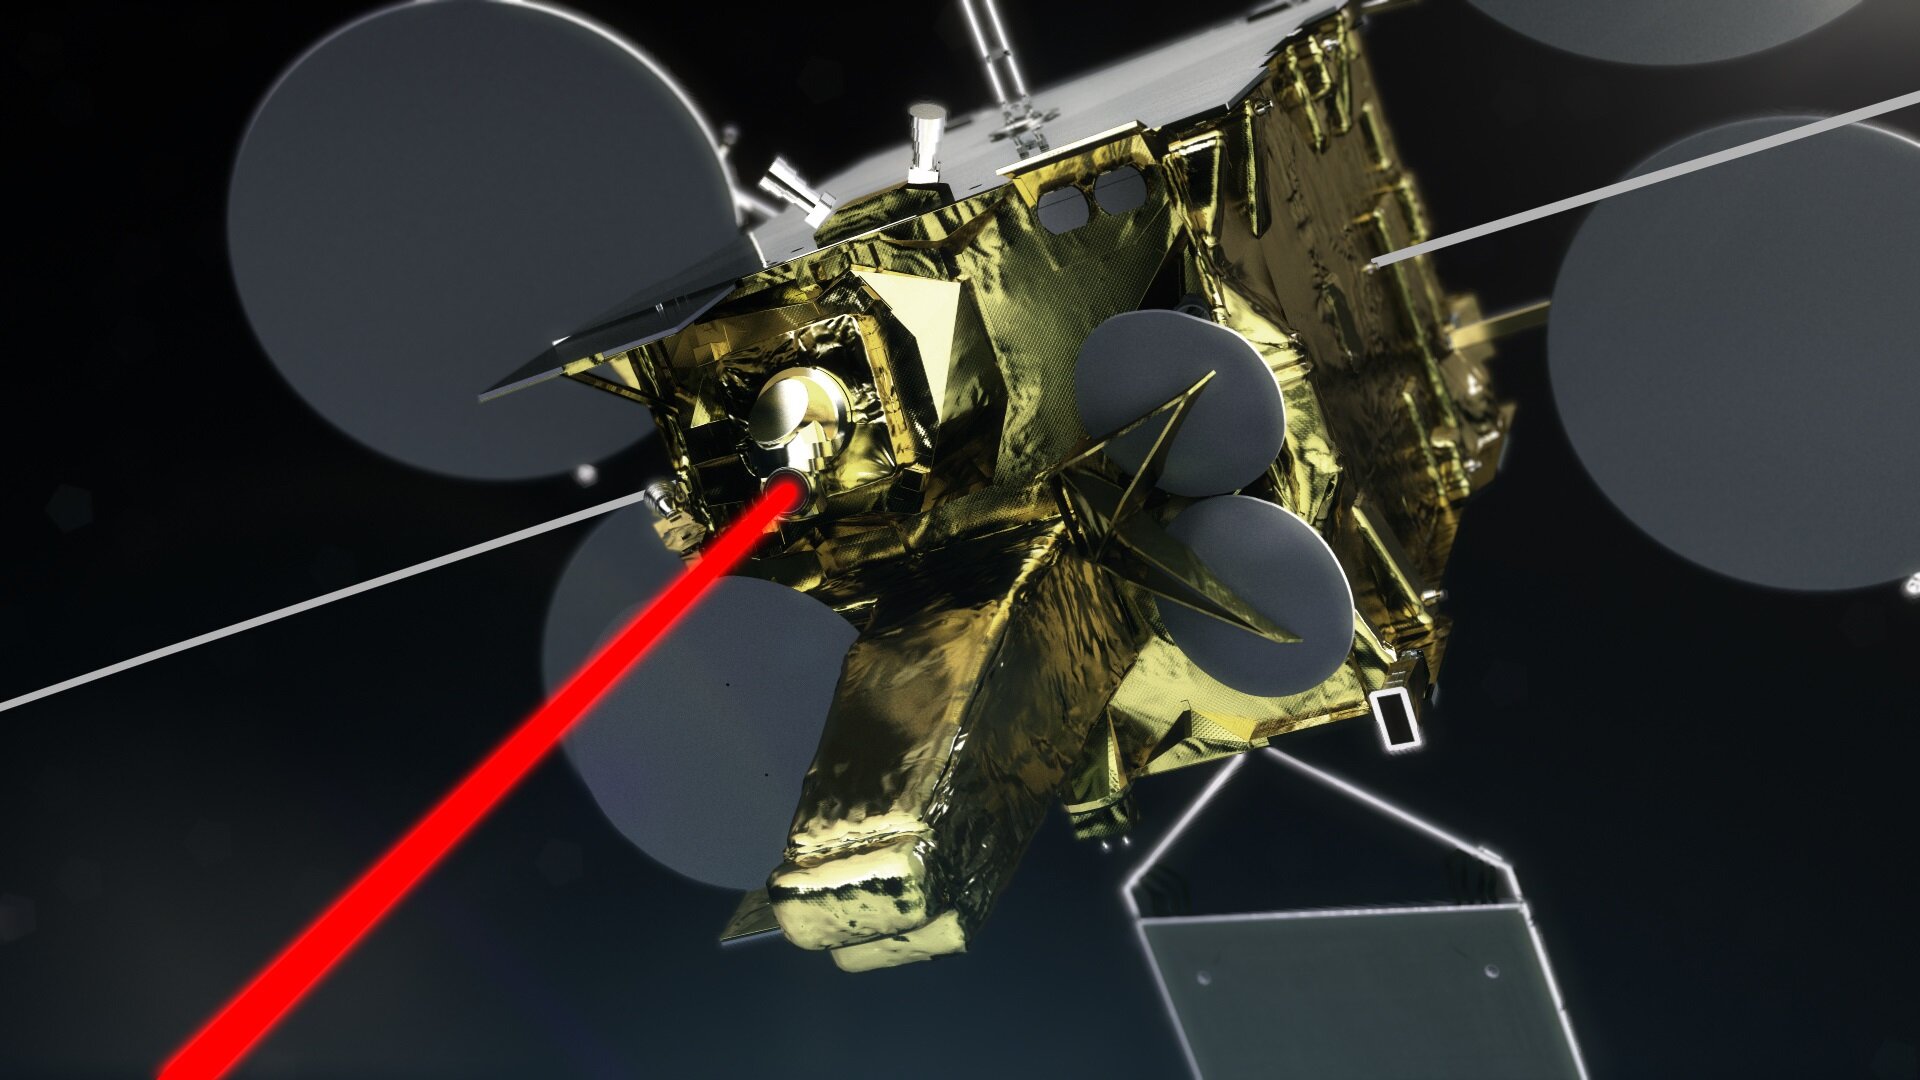 EDRS-A sending a high capacity laser beam